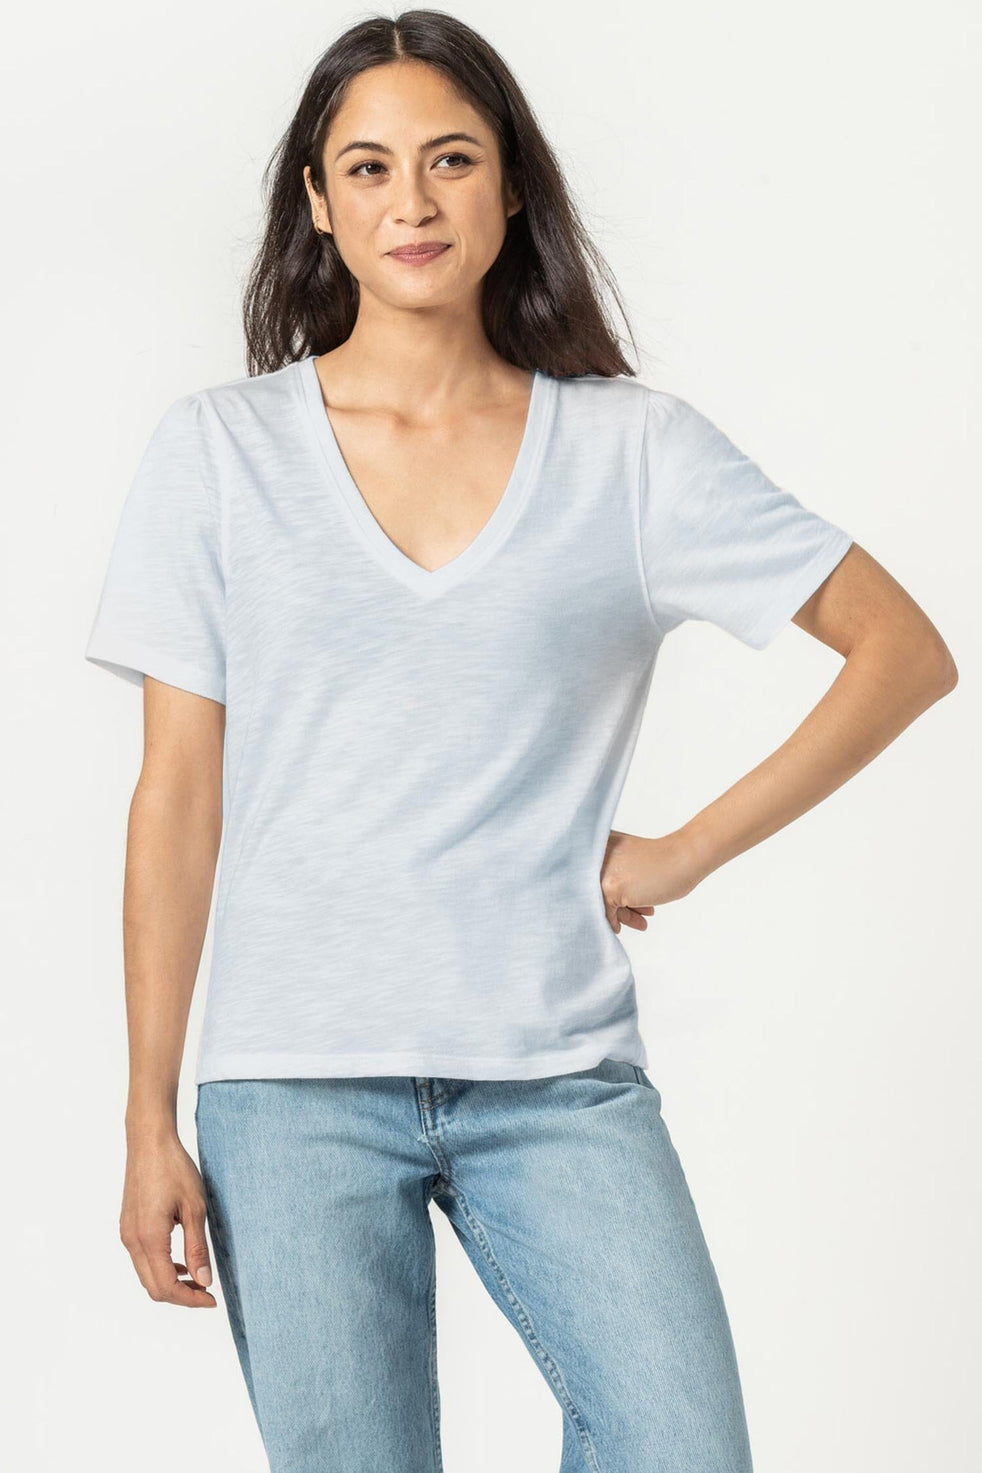 on Women Short | Sleeve Shirts Sale Women\'s Tops for Long & Cotton